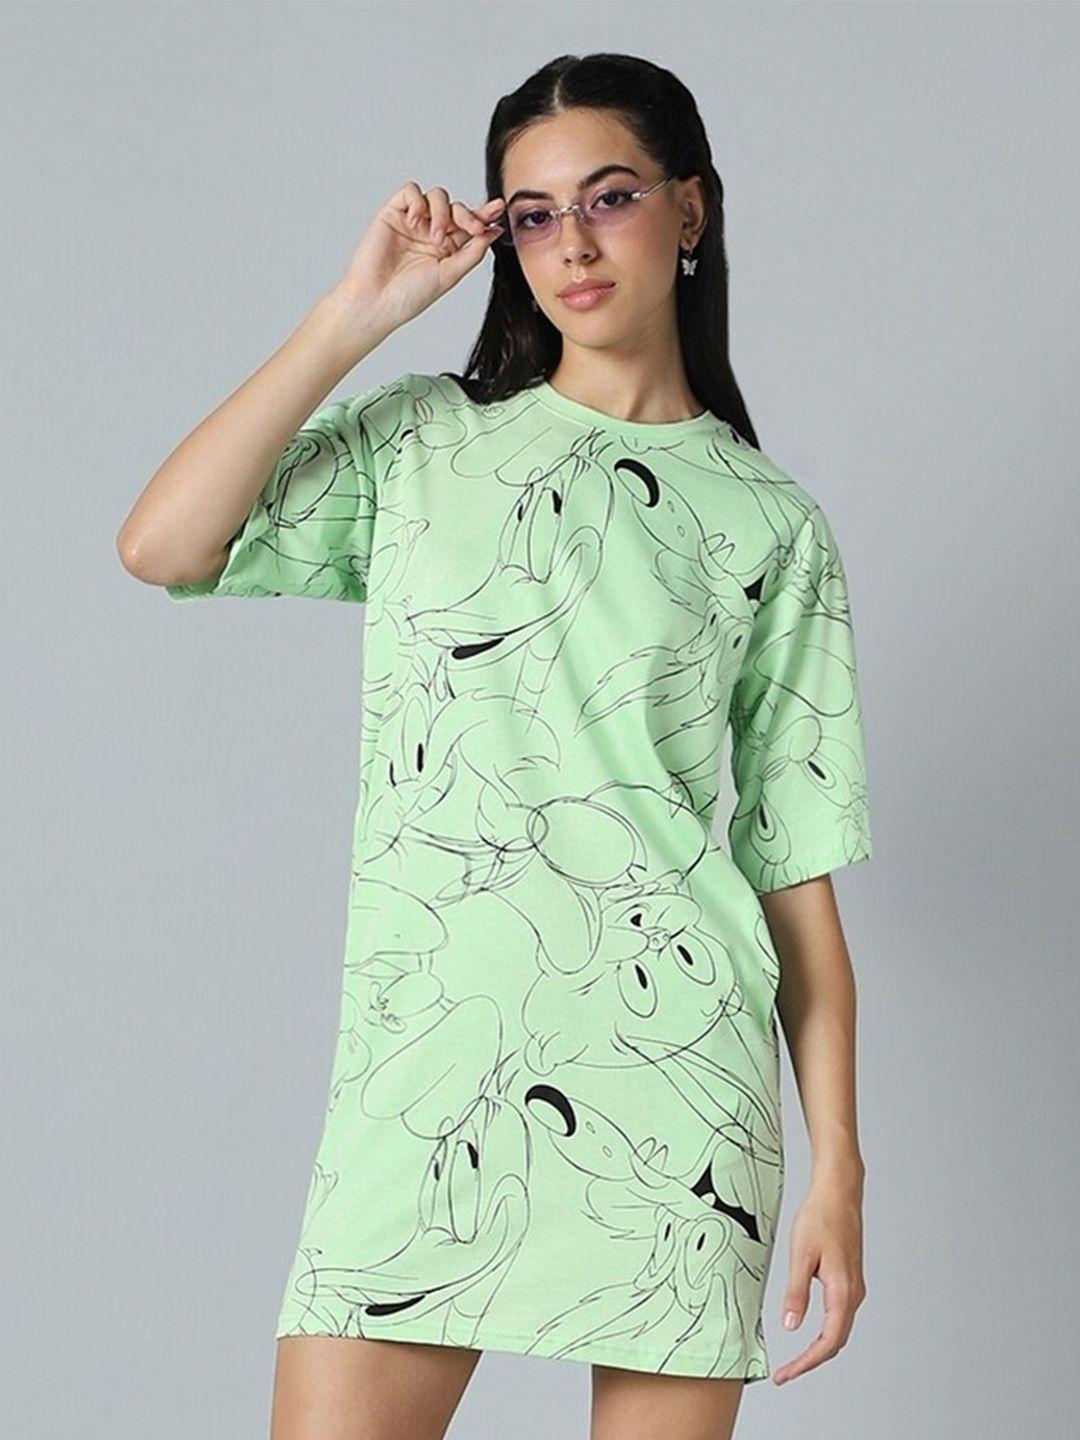 bewakoof green looney tunes printed round neck short sleeves cotton t-shirt dress